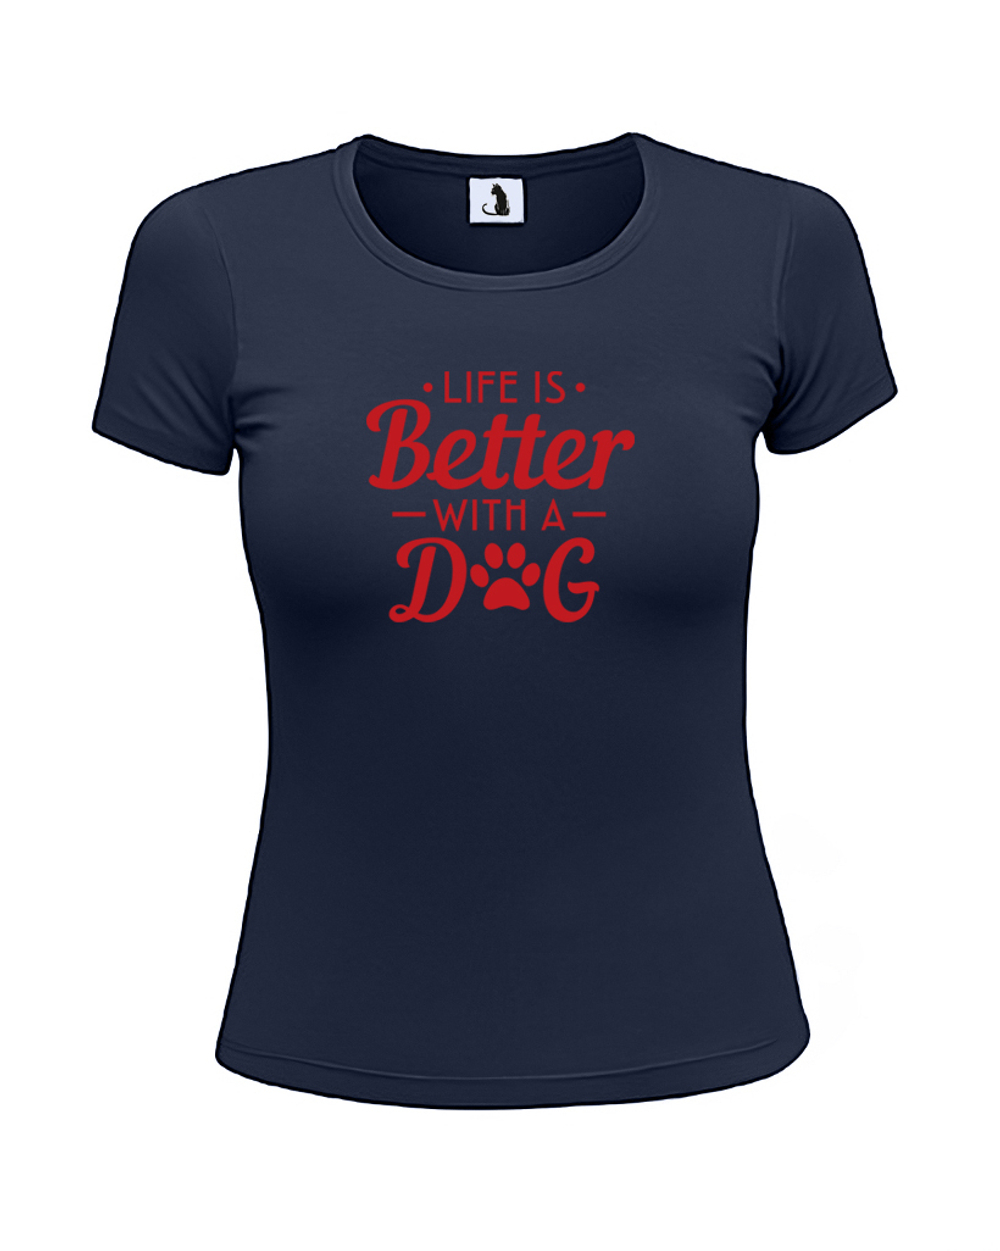 Футболка Life is better with a dog unisex темно-синяя с красным рисунком